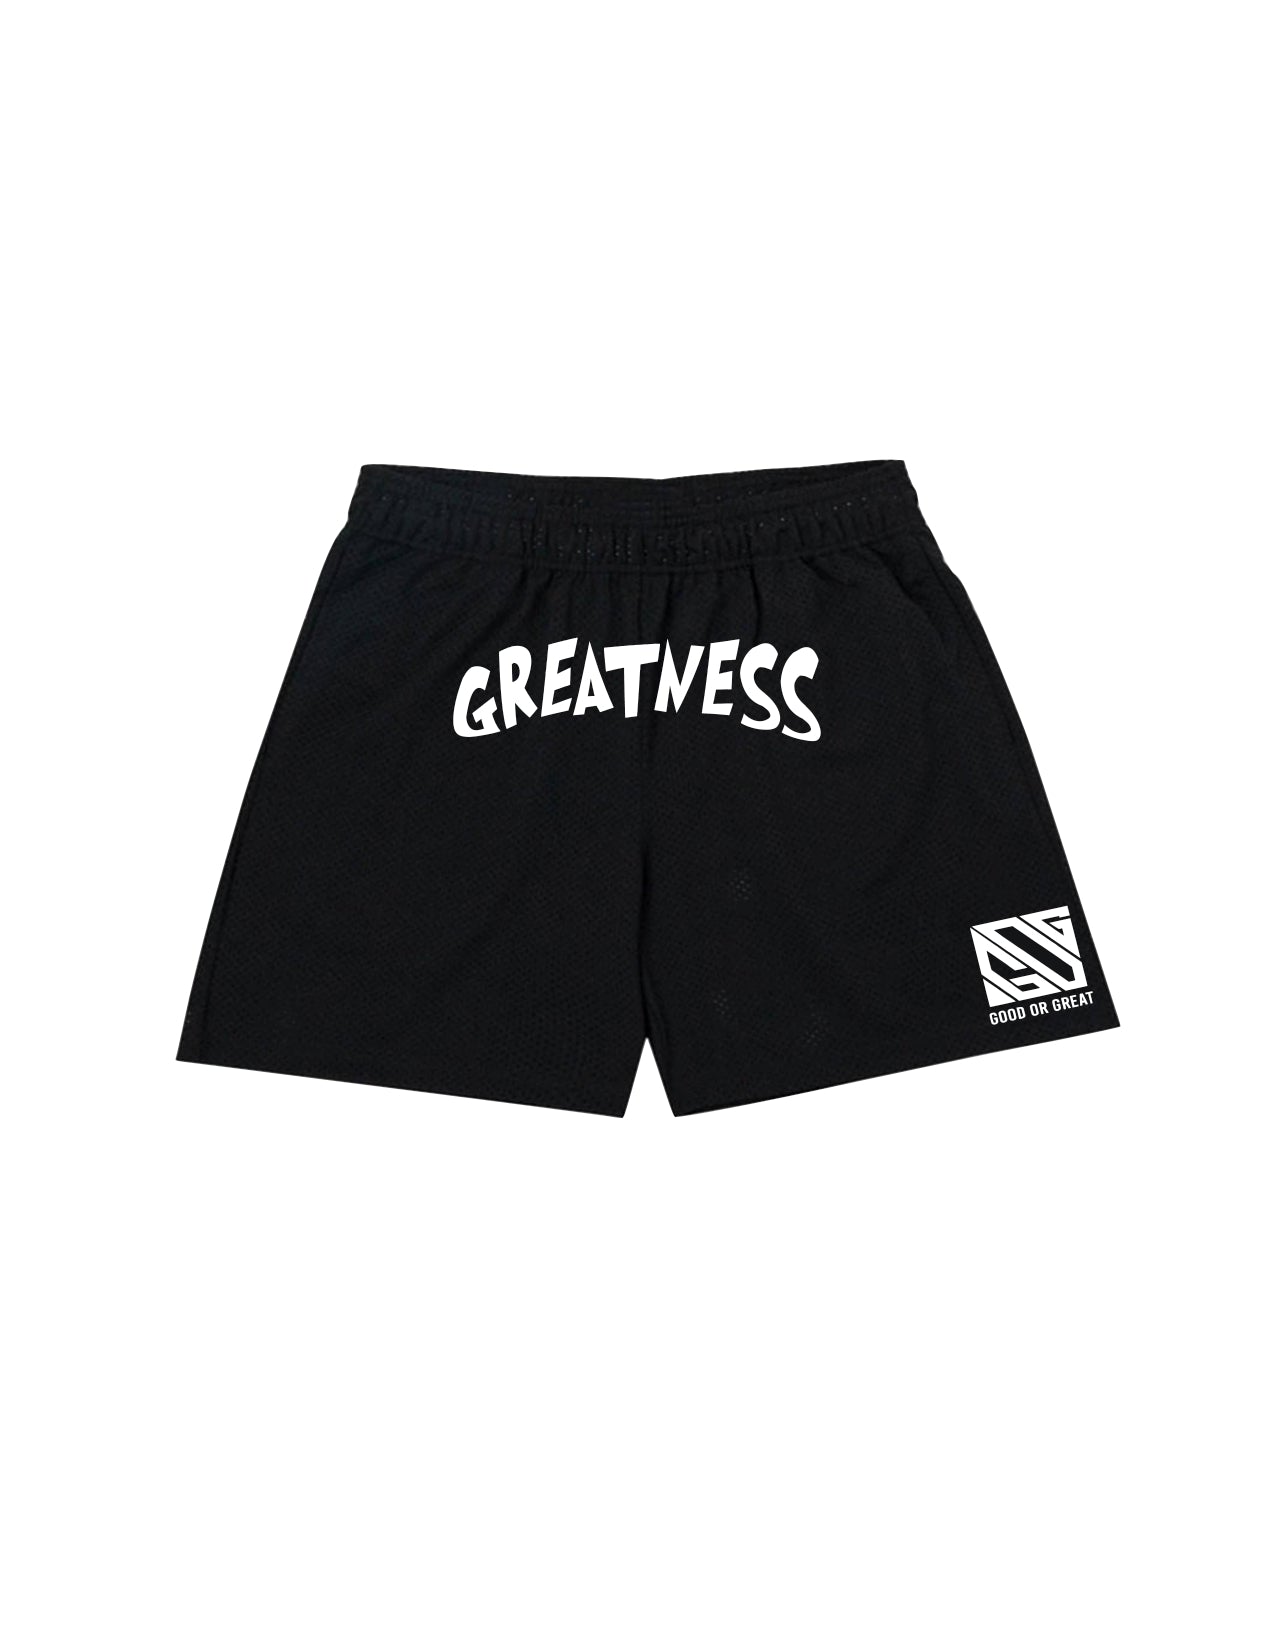 Greatness Mesh Shorts